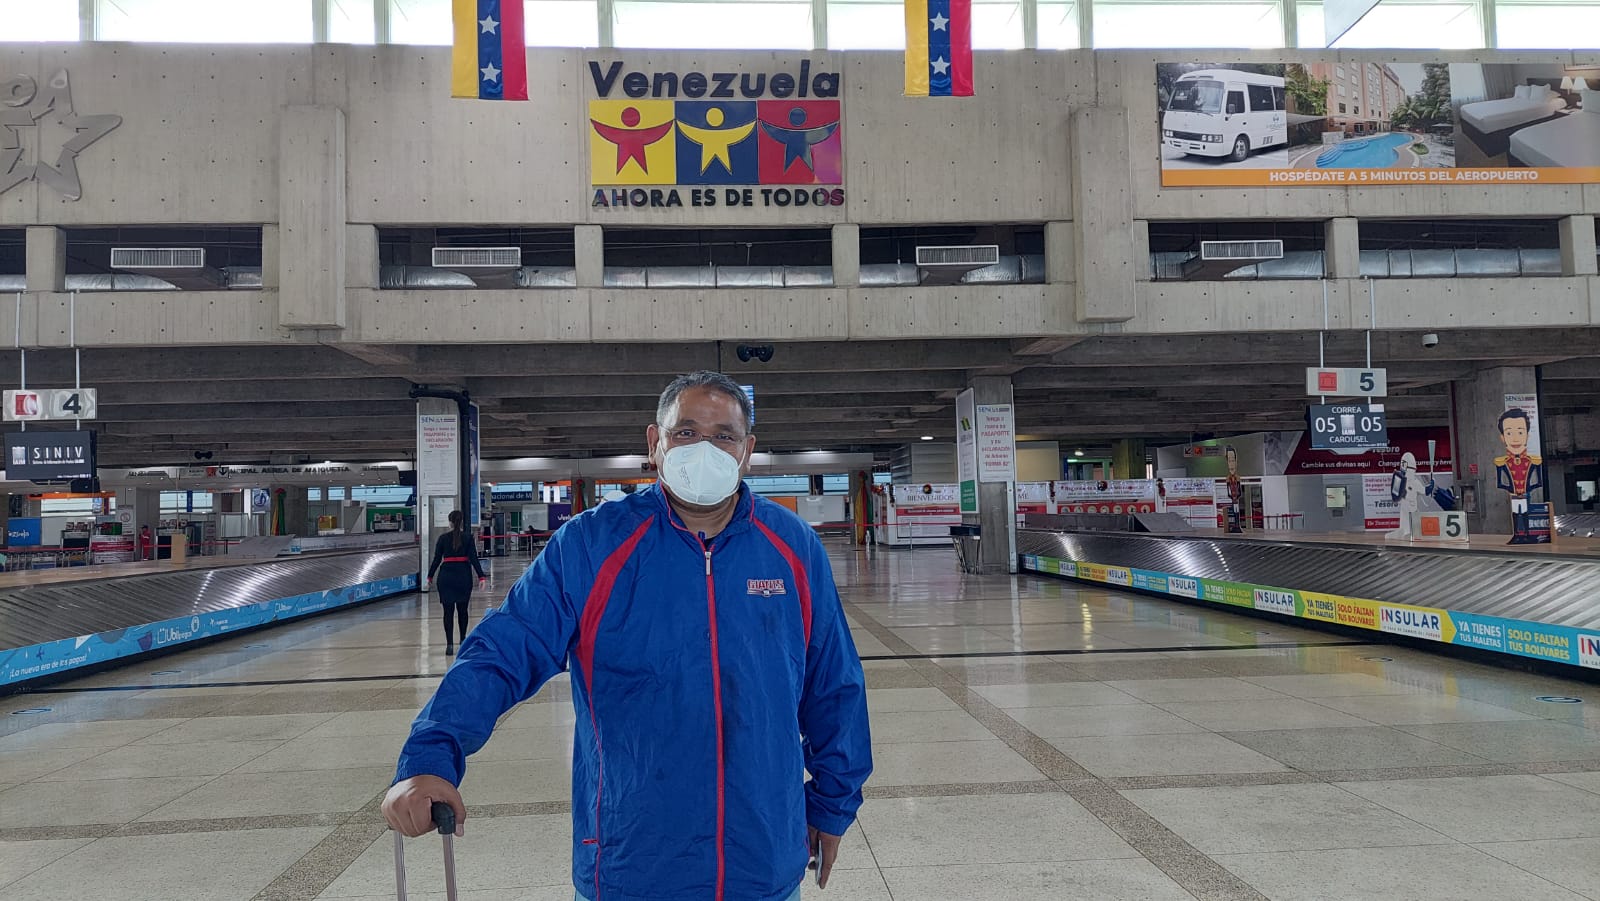 Ketum JMSI Teguh Santosa Jadi Pemantau Pemilu Venezuela